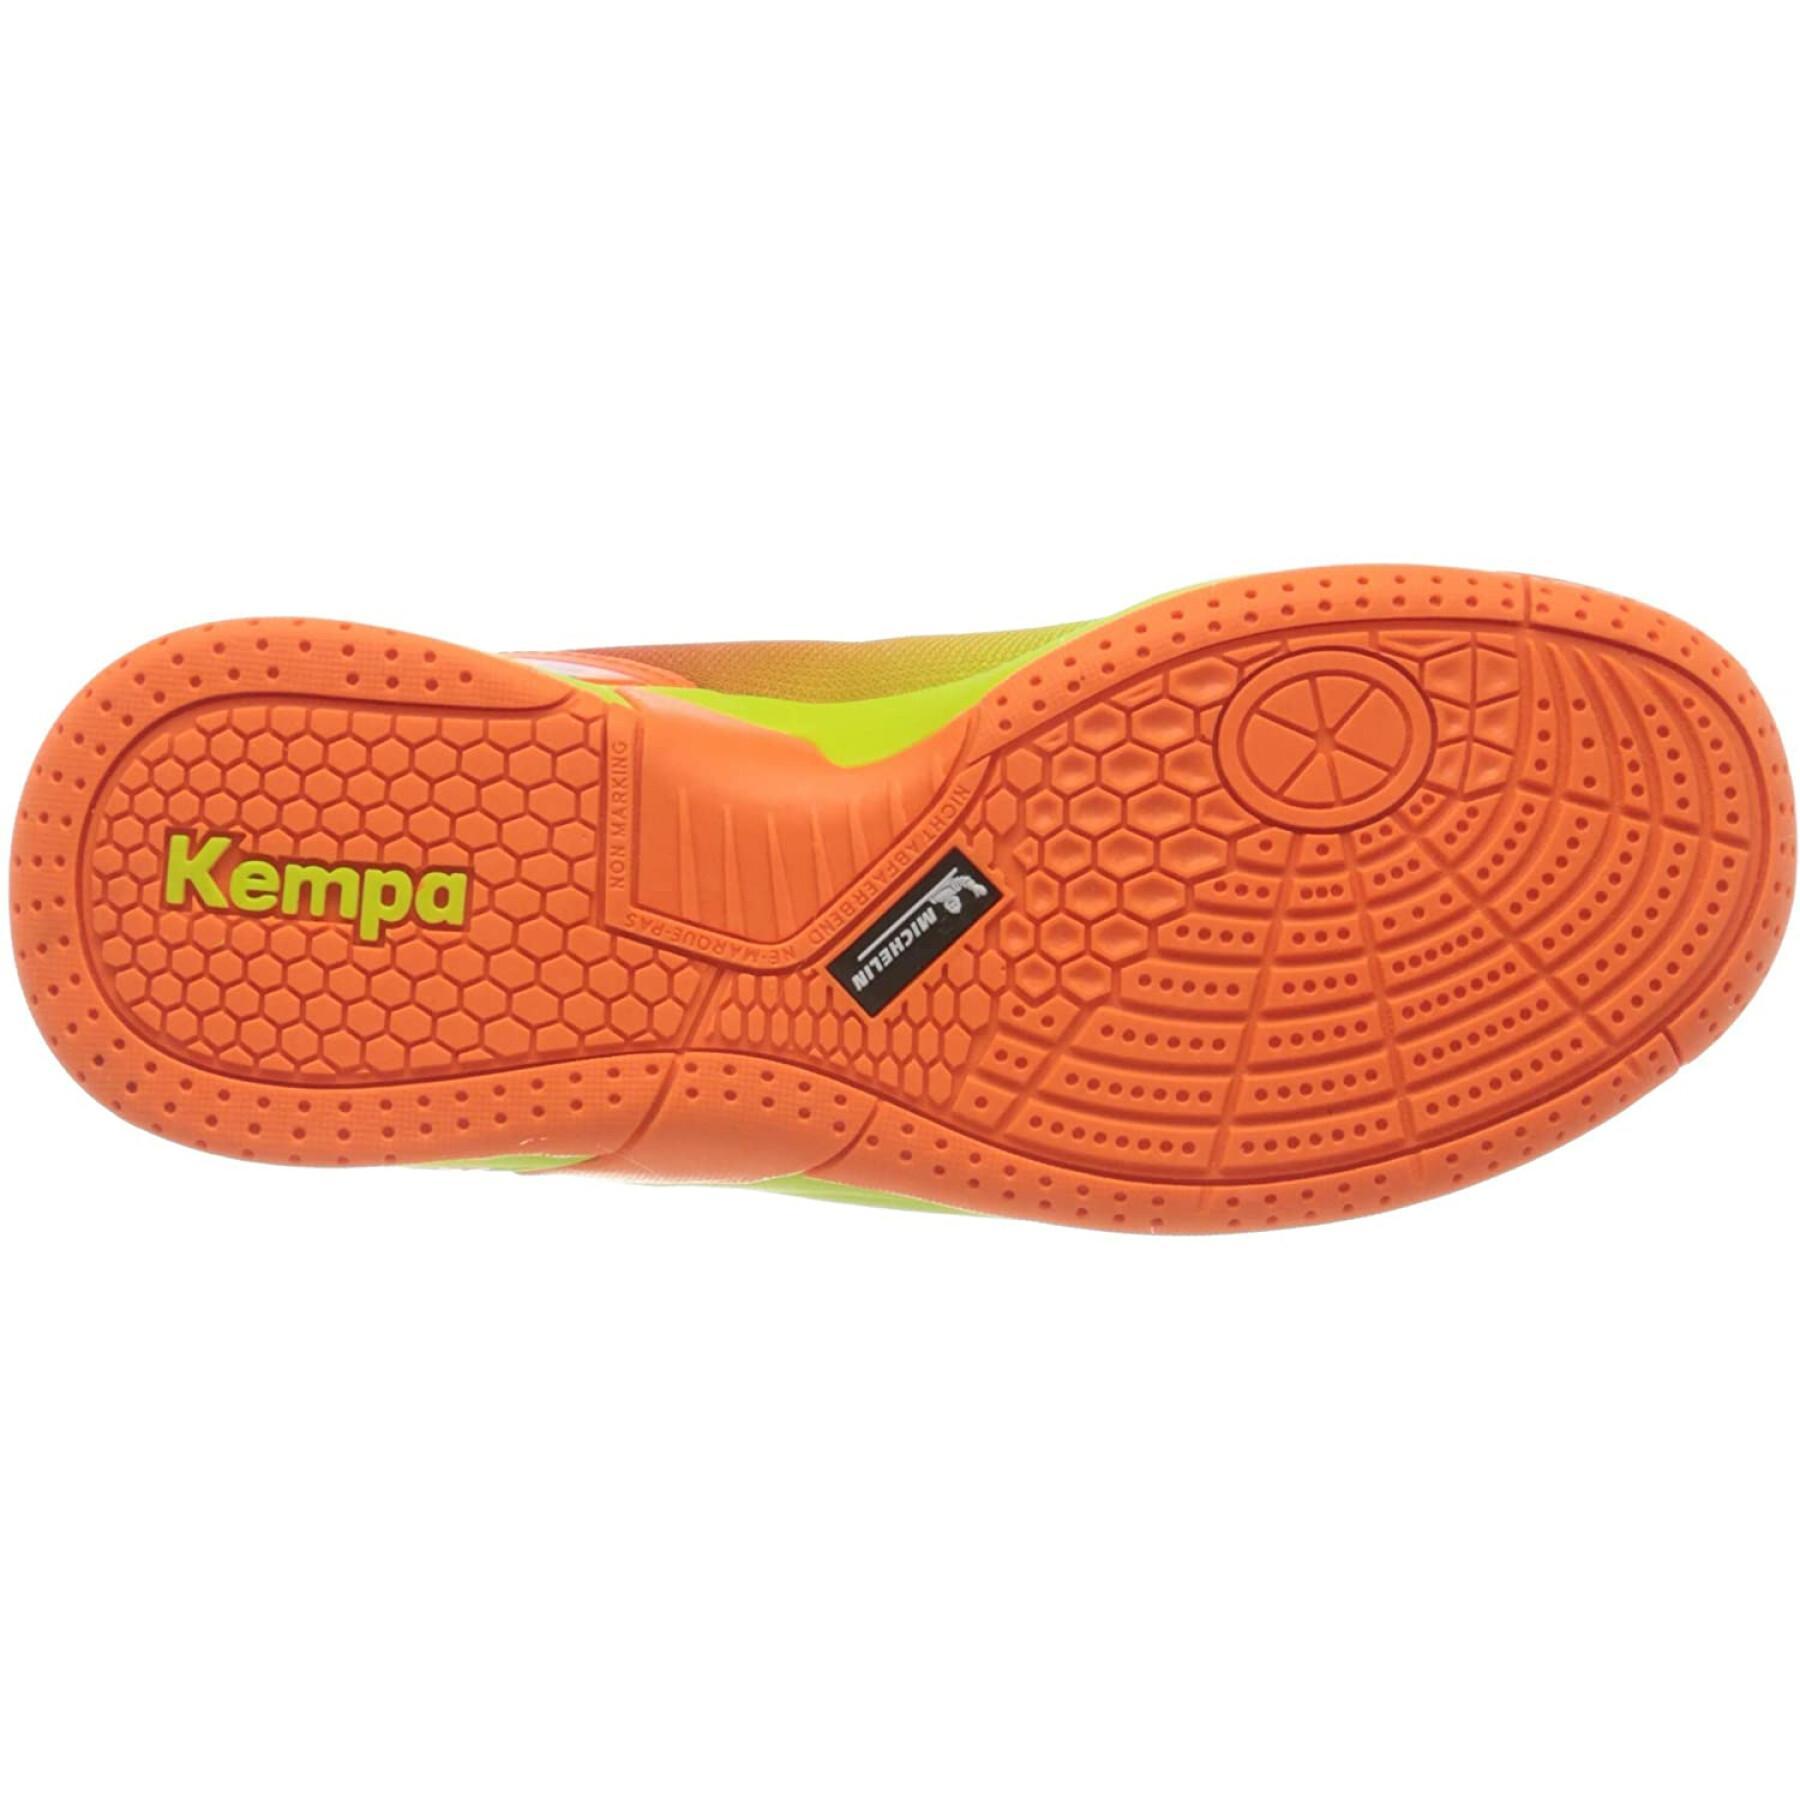 Children's shoes Kempa Attack 2.0